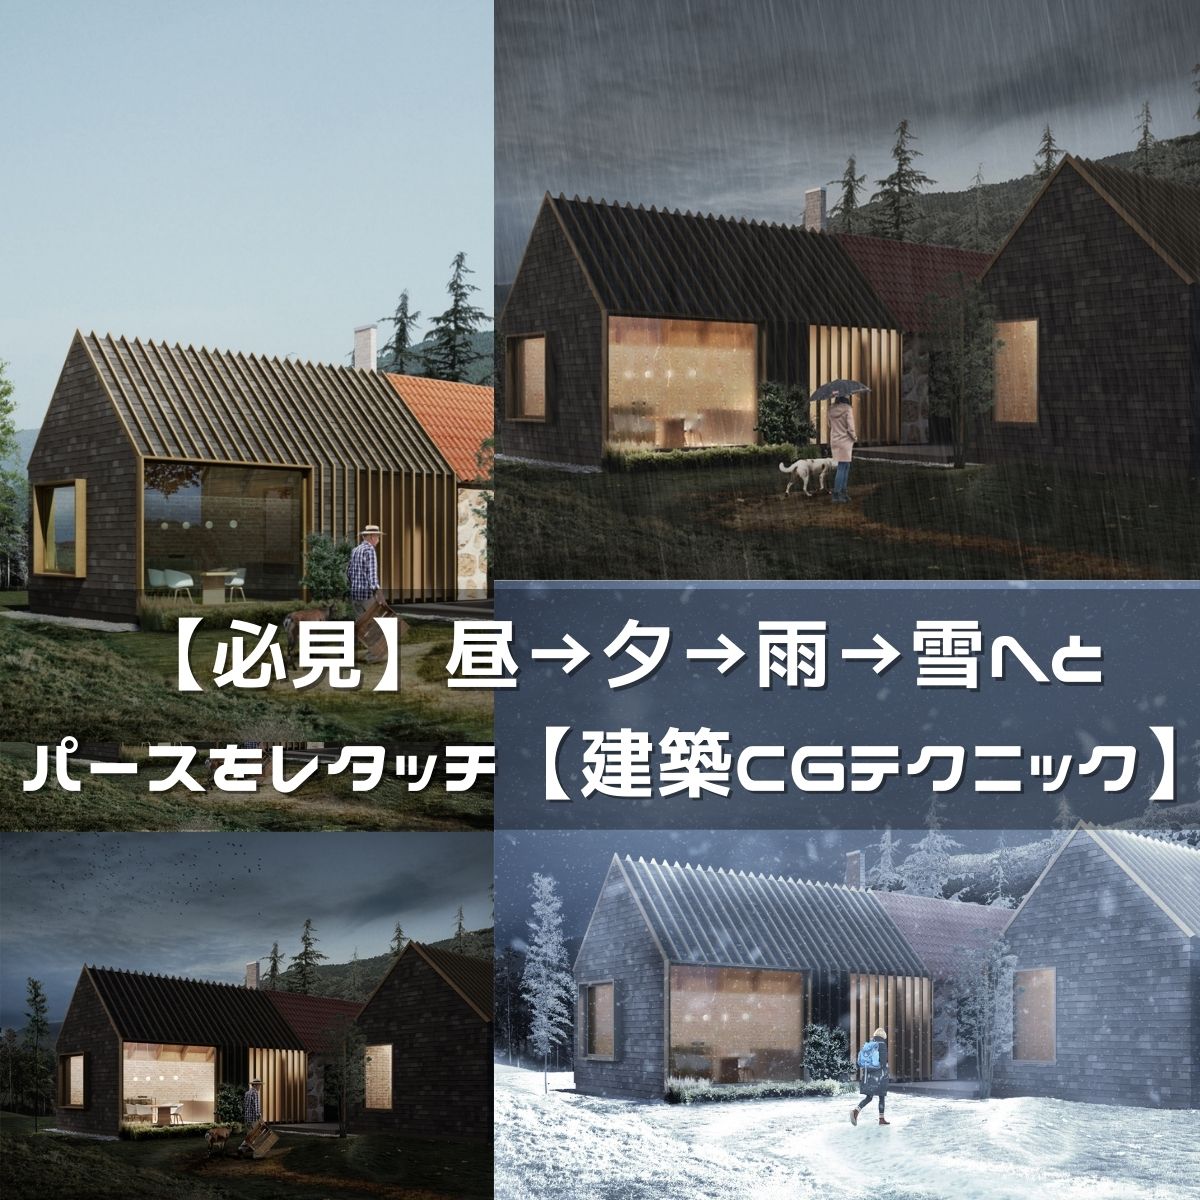 【Photoshop】昼→夕→雨→雪へとレタッチ【建築パース】